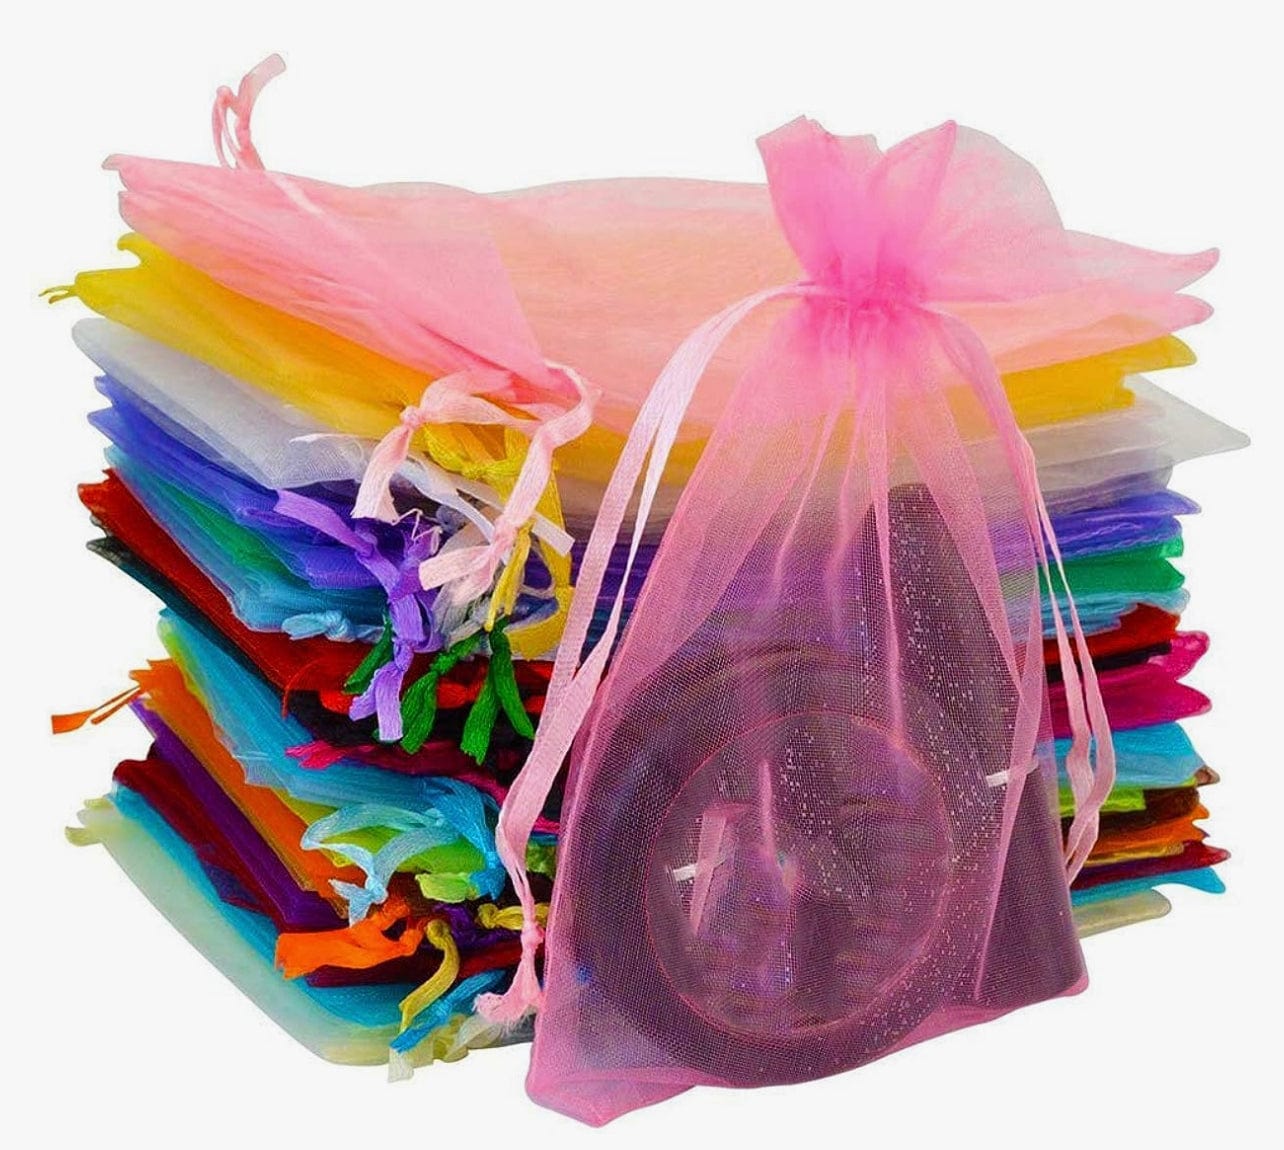 Lamansh potli bags LAMANSH® Organza Potli for Wedding Return Gifts 🎁 | Low cost Packing potli Bags for putting Dry fruits (Pack of 100)